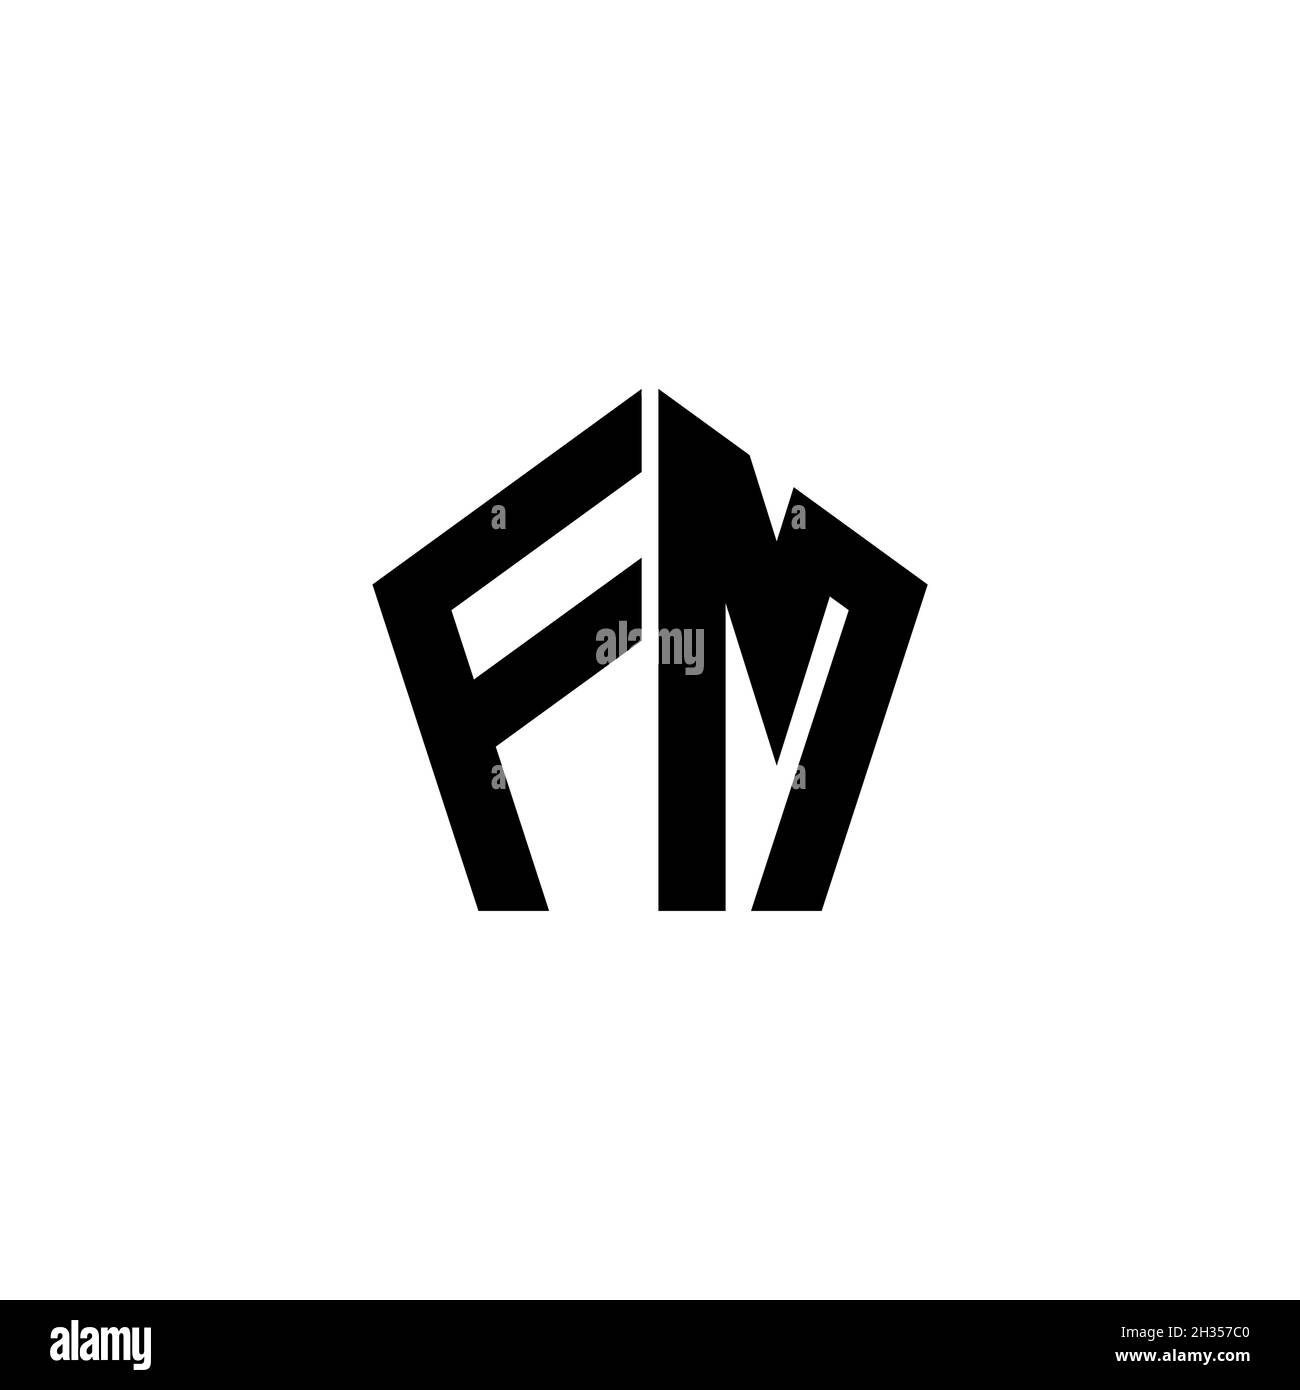 FM Monogram logo letter with polygonal geometric shape style design isolated on white background. Star polygonal, shield star geometric. Stock Vector